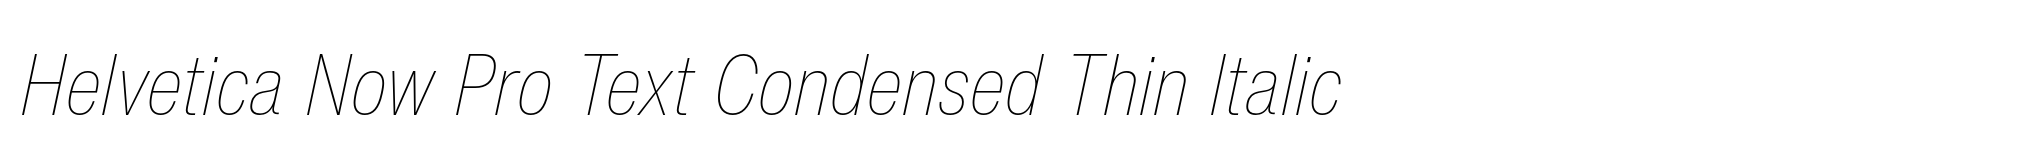 Helvetica Now Pro Text Condensed Thin Italic image